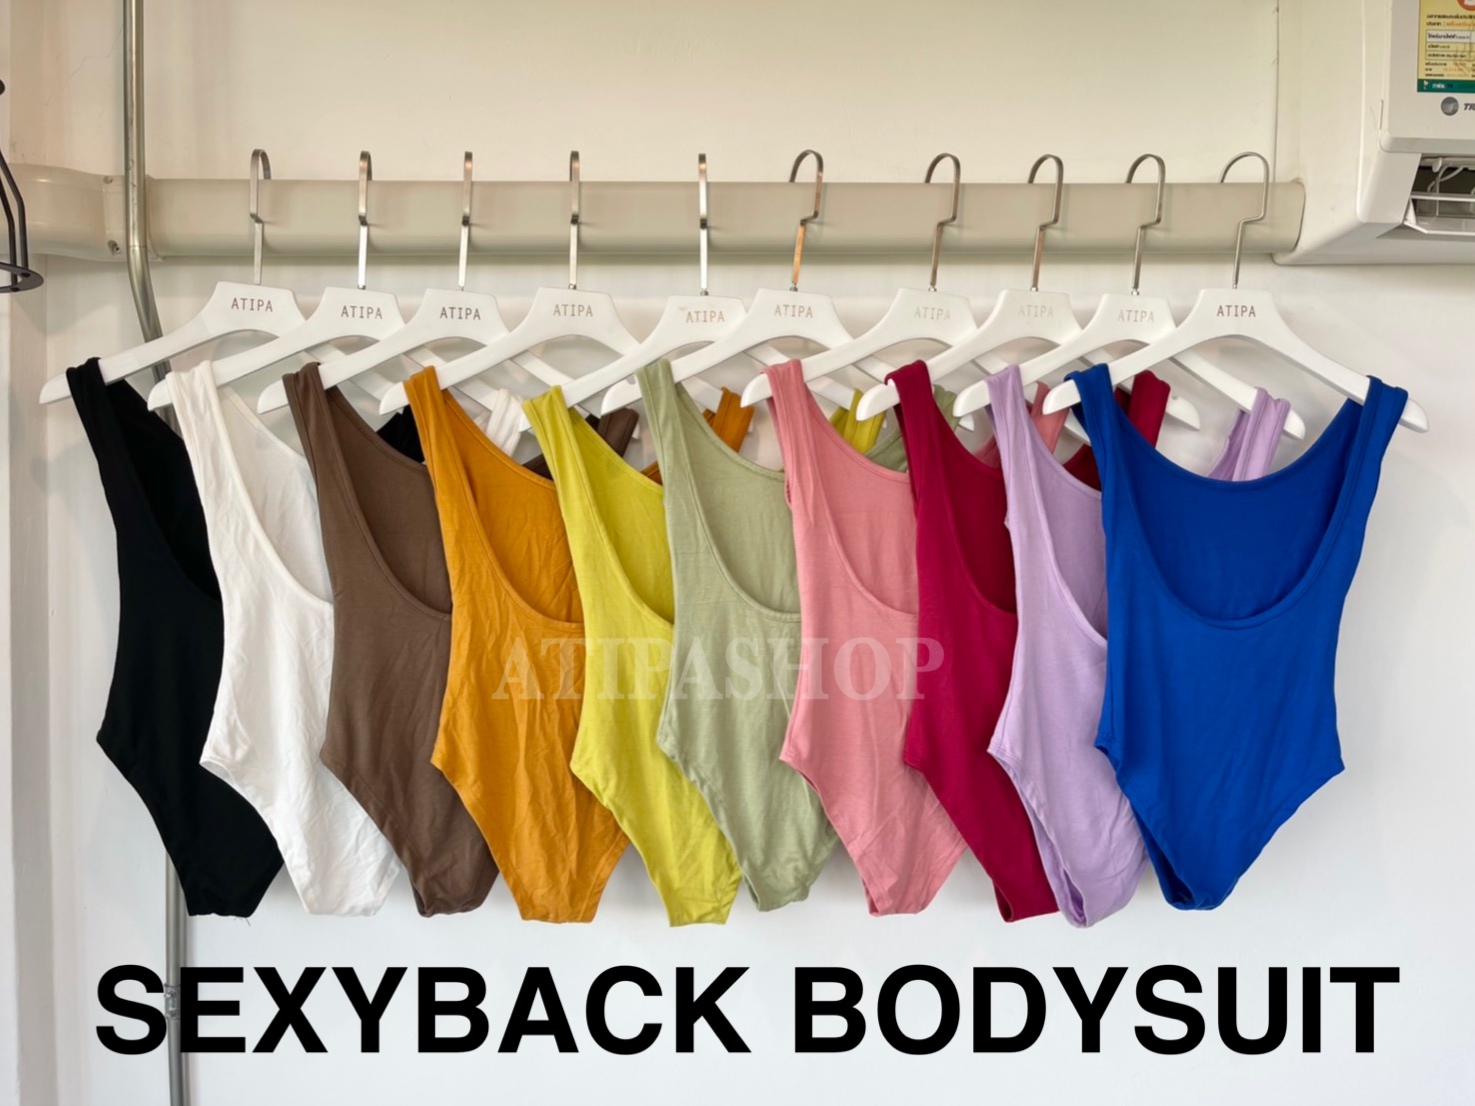 Atipashop - Sexyback bodysuit บอดี้สูทเว้าหลัง